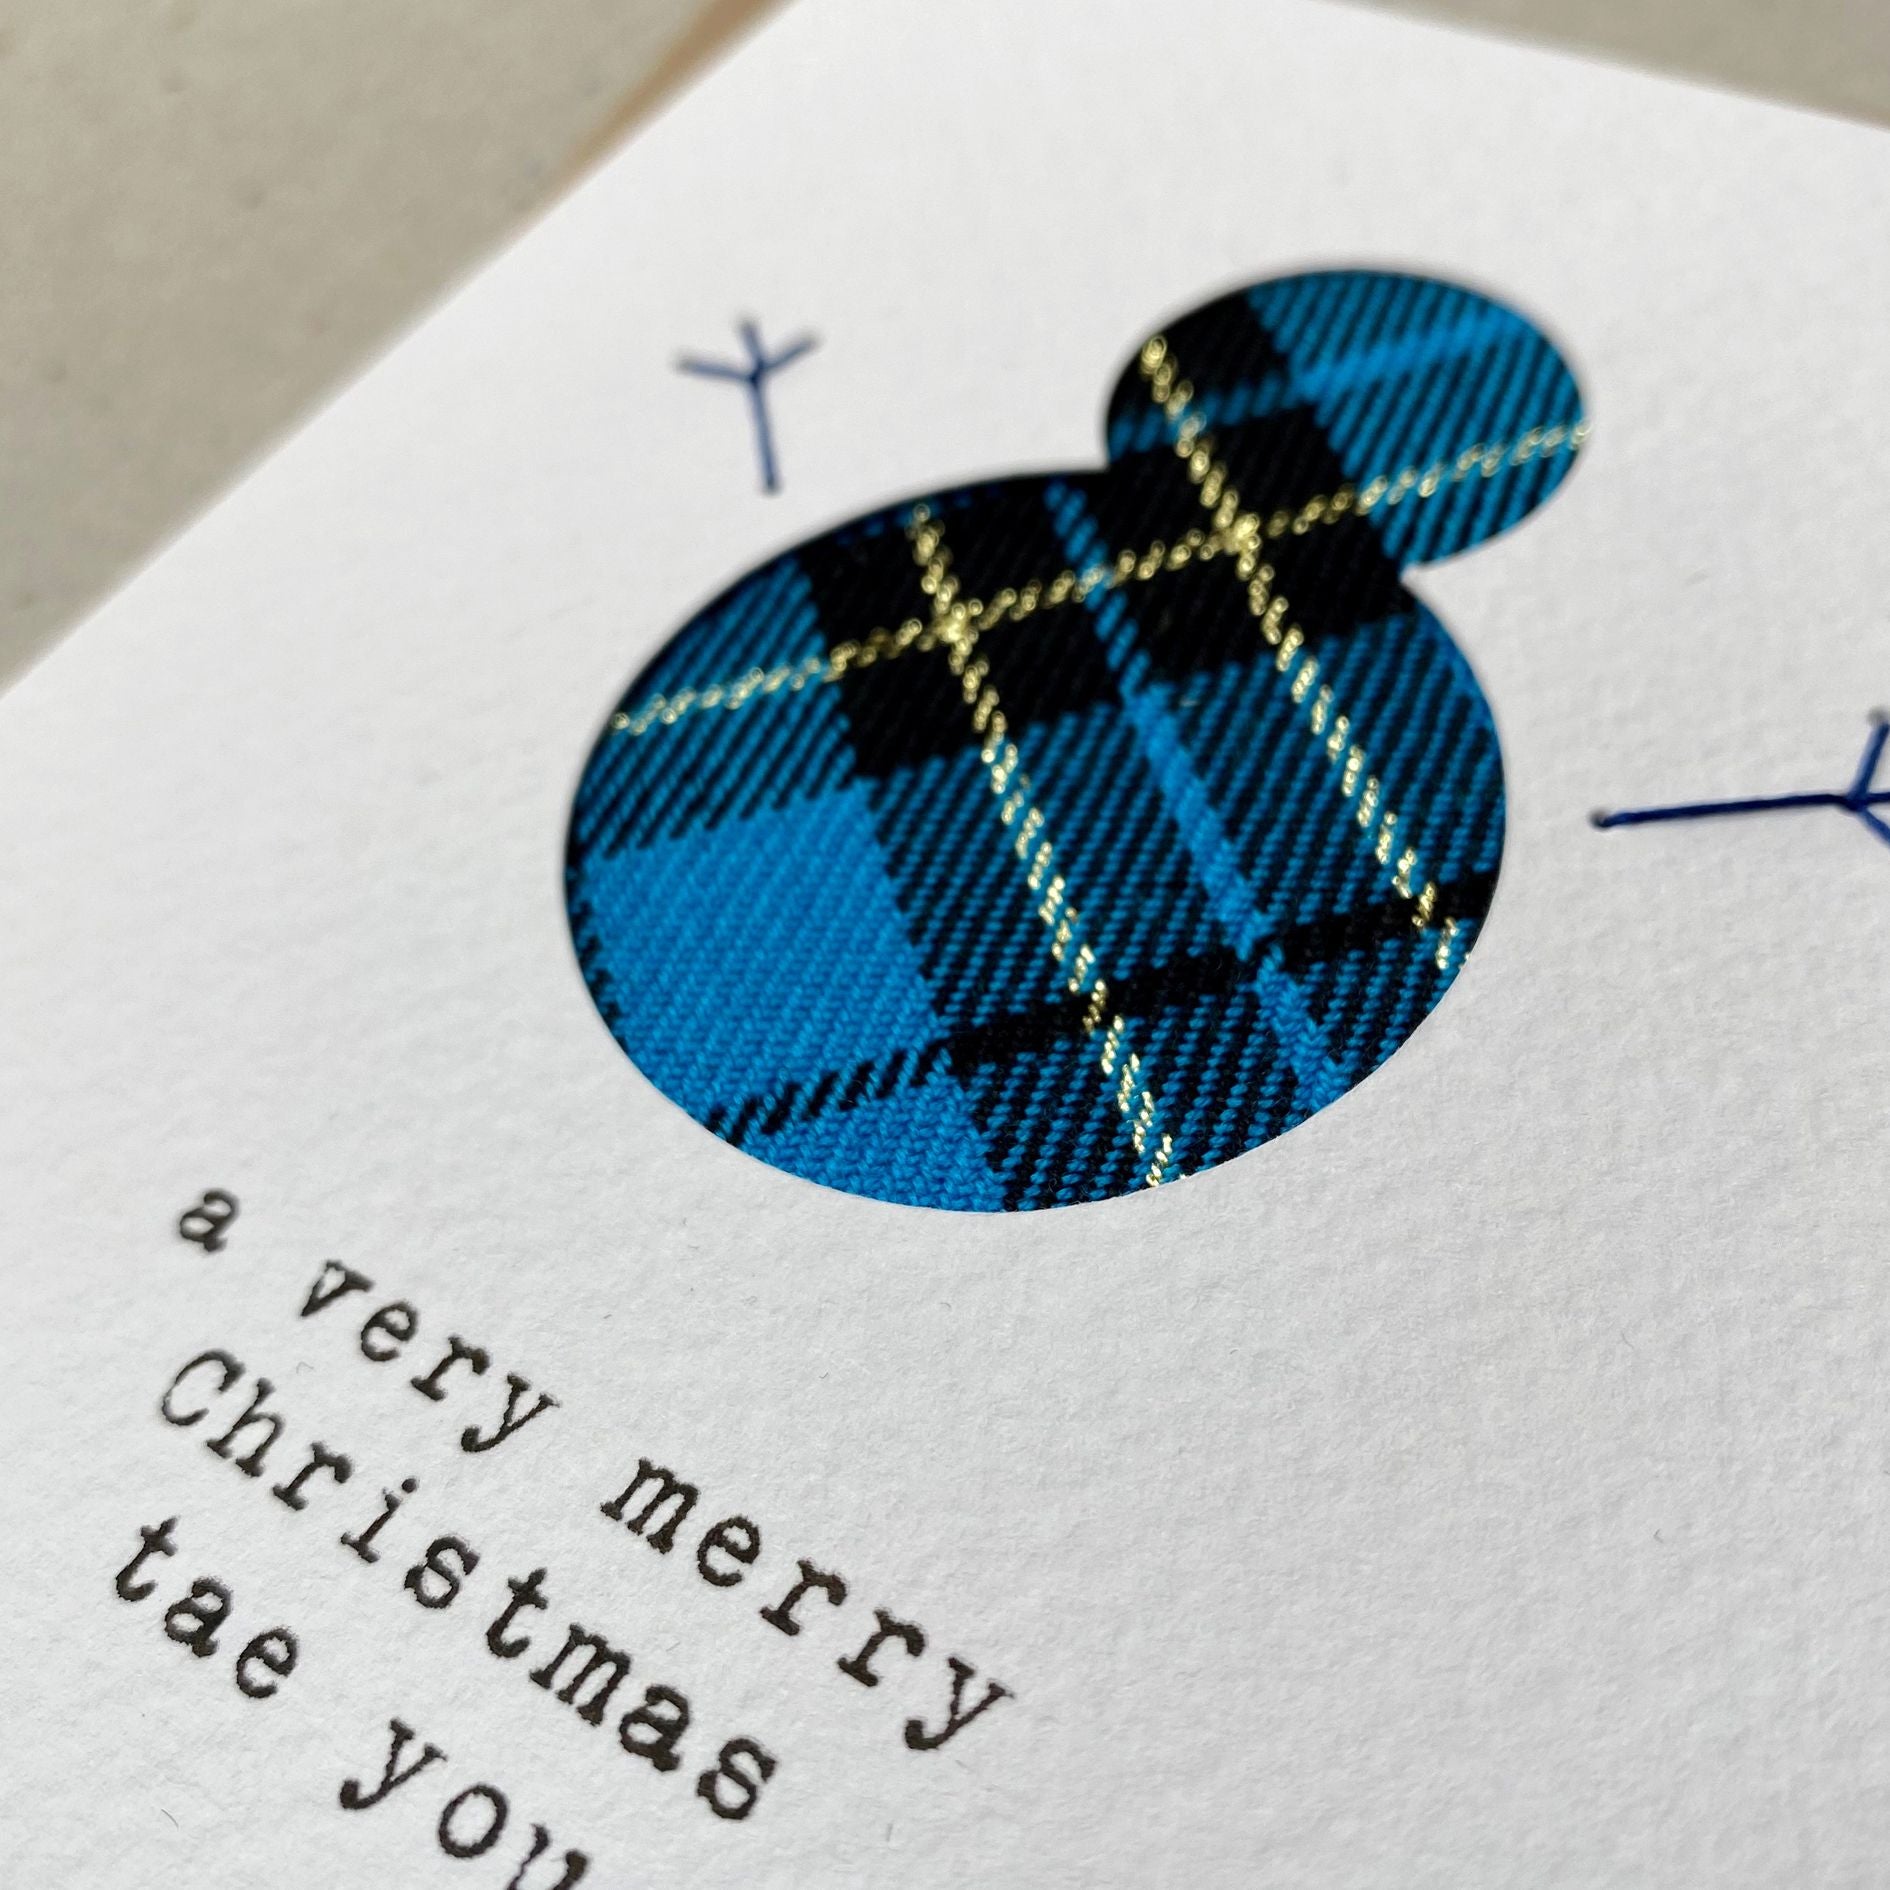 Hand Stitched Tartan Snowman Christmas Card made by Hiyapal